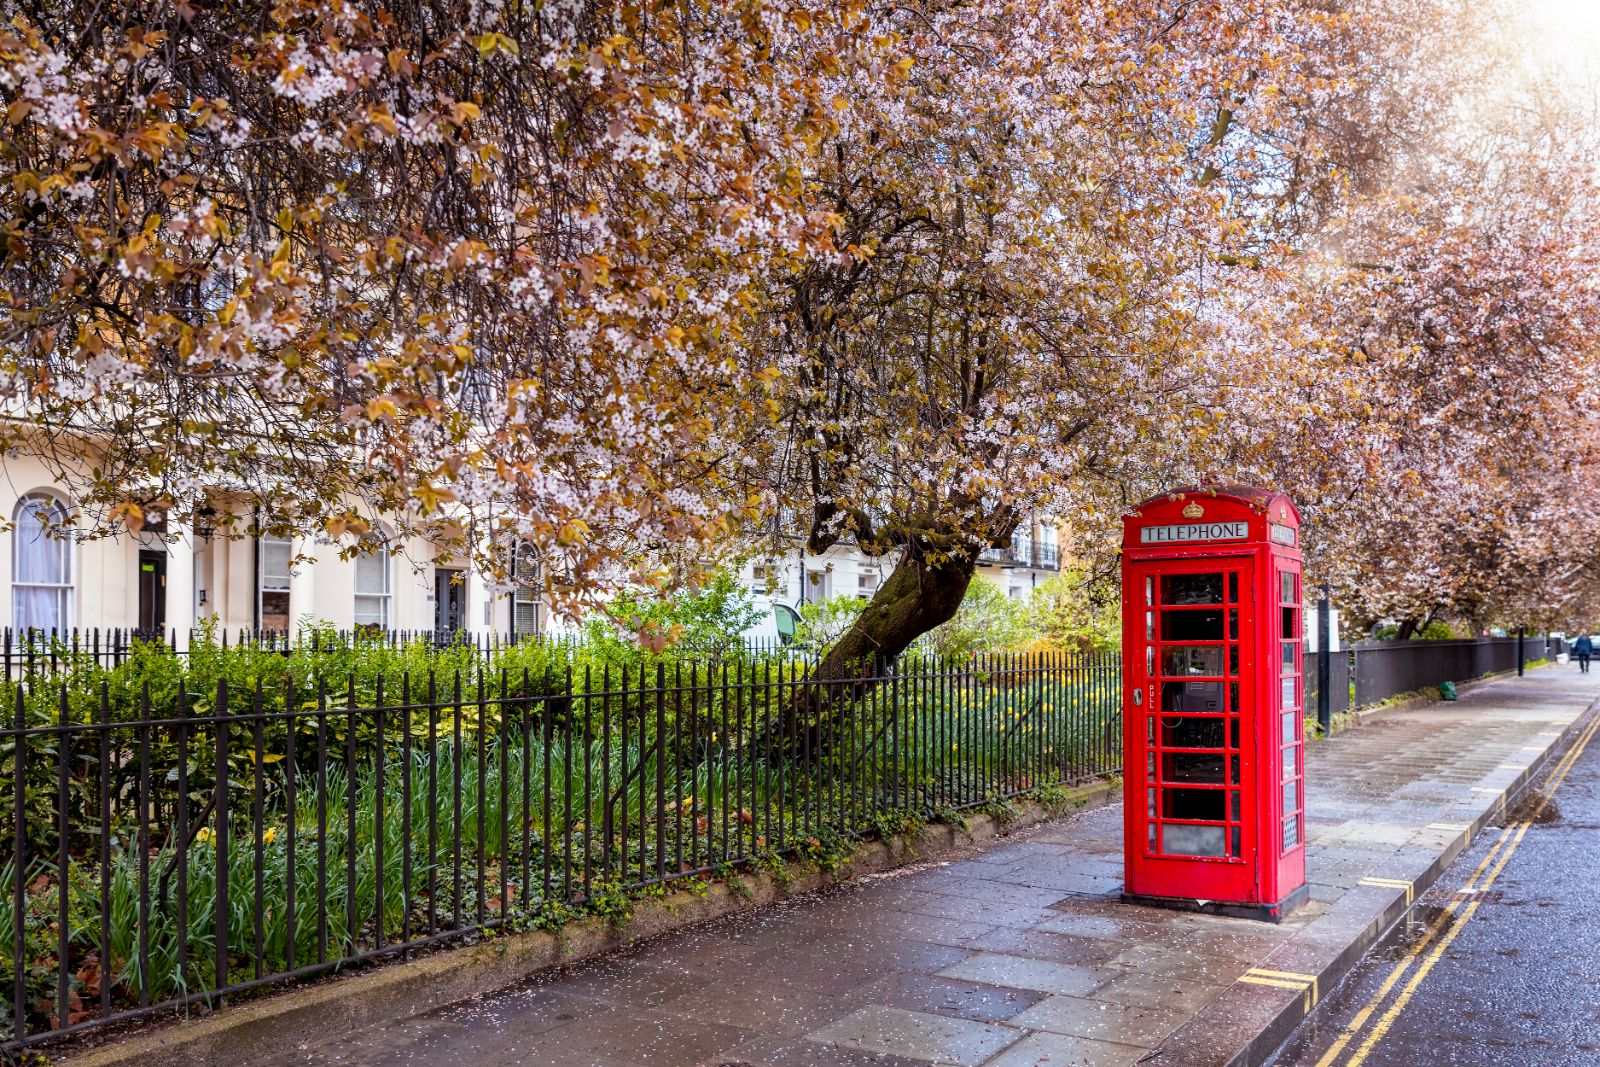 A telephone box in London